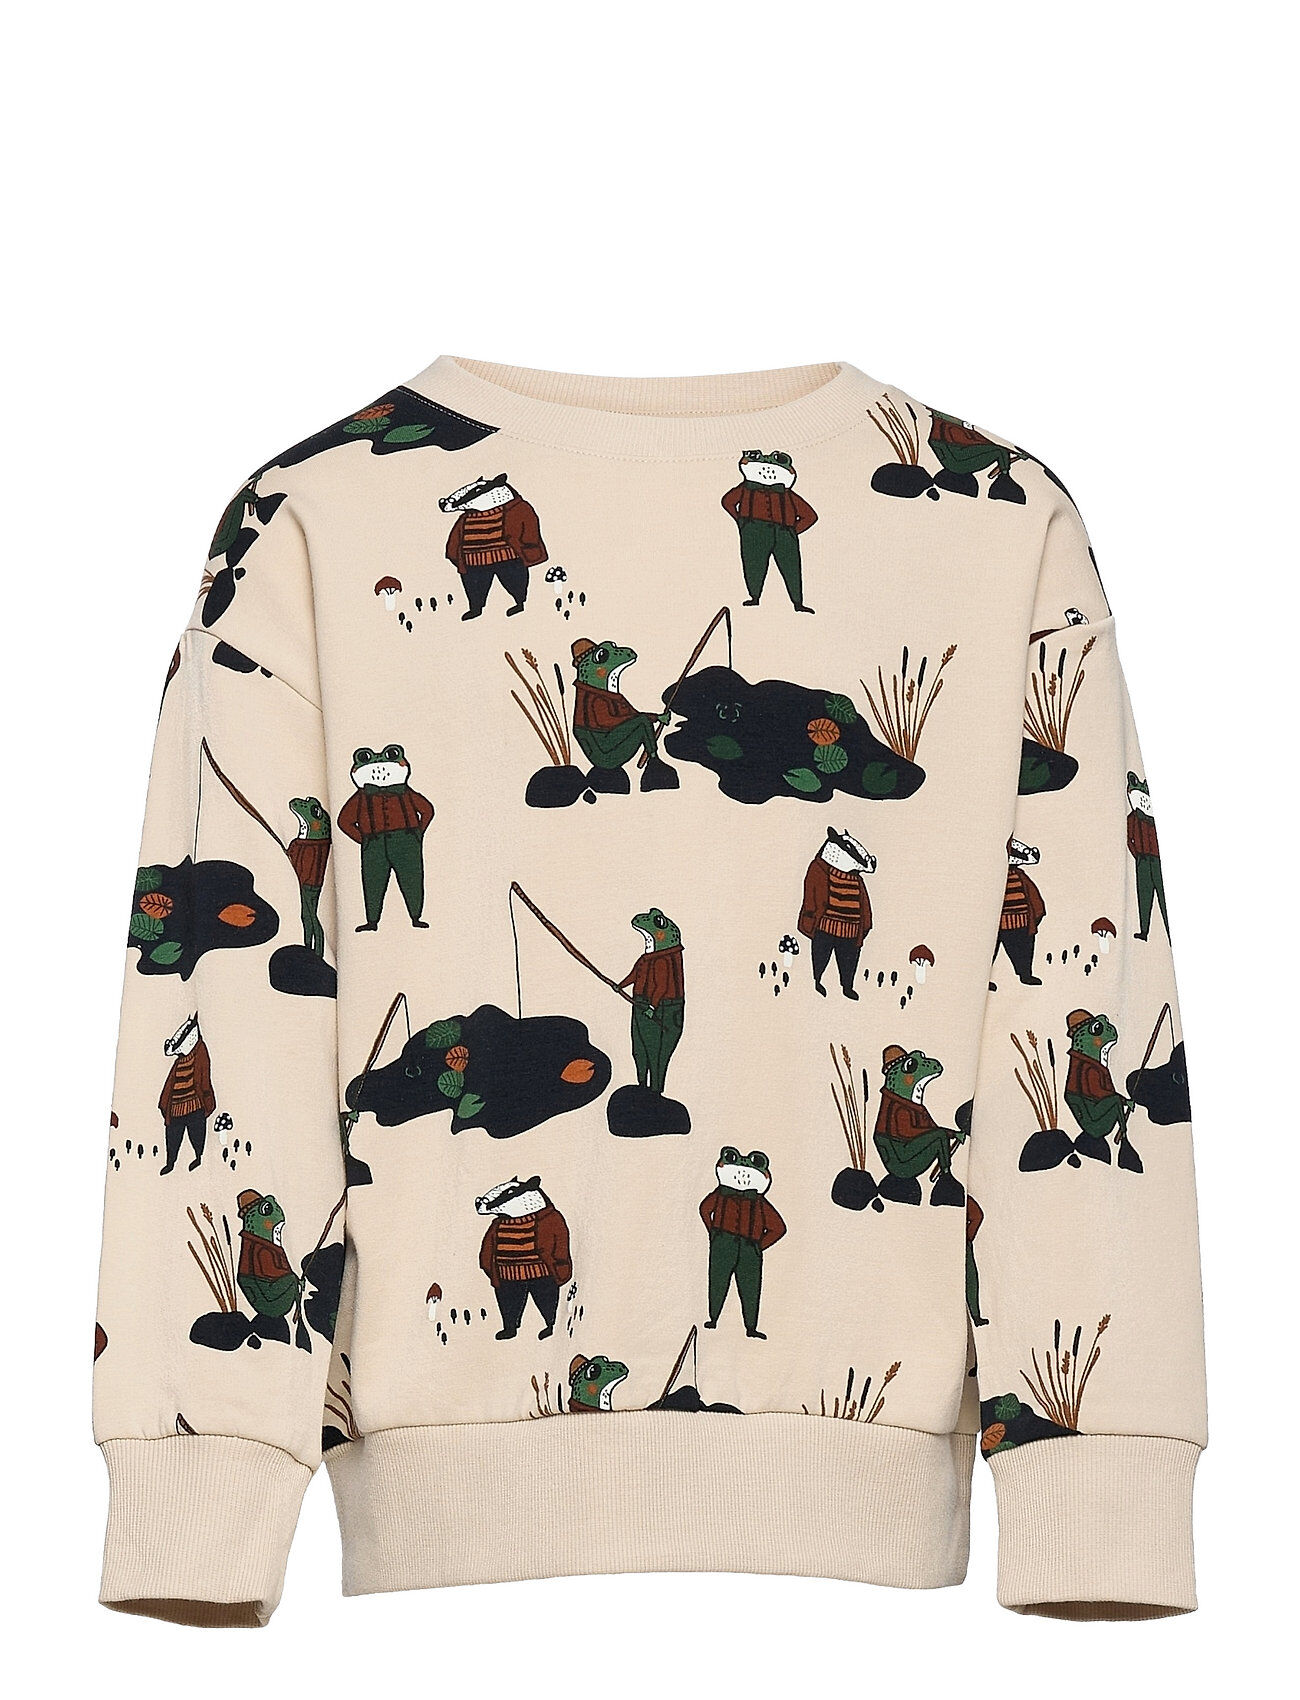 Lindex Sweater Aop Frog Fish Sweat-shirt Genser Multi/mønstret Lindex